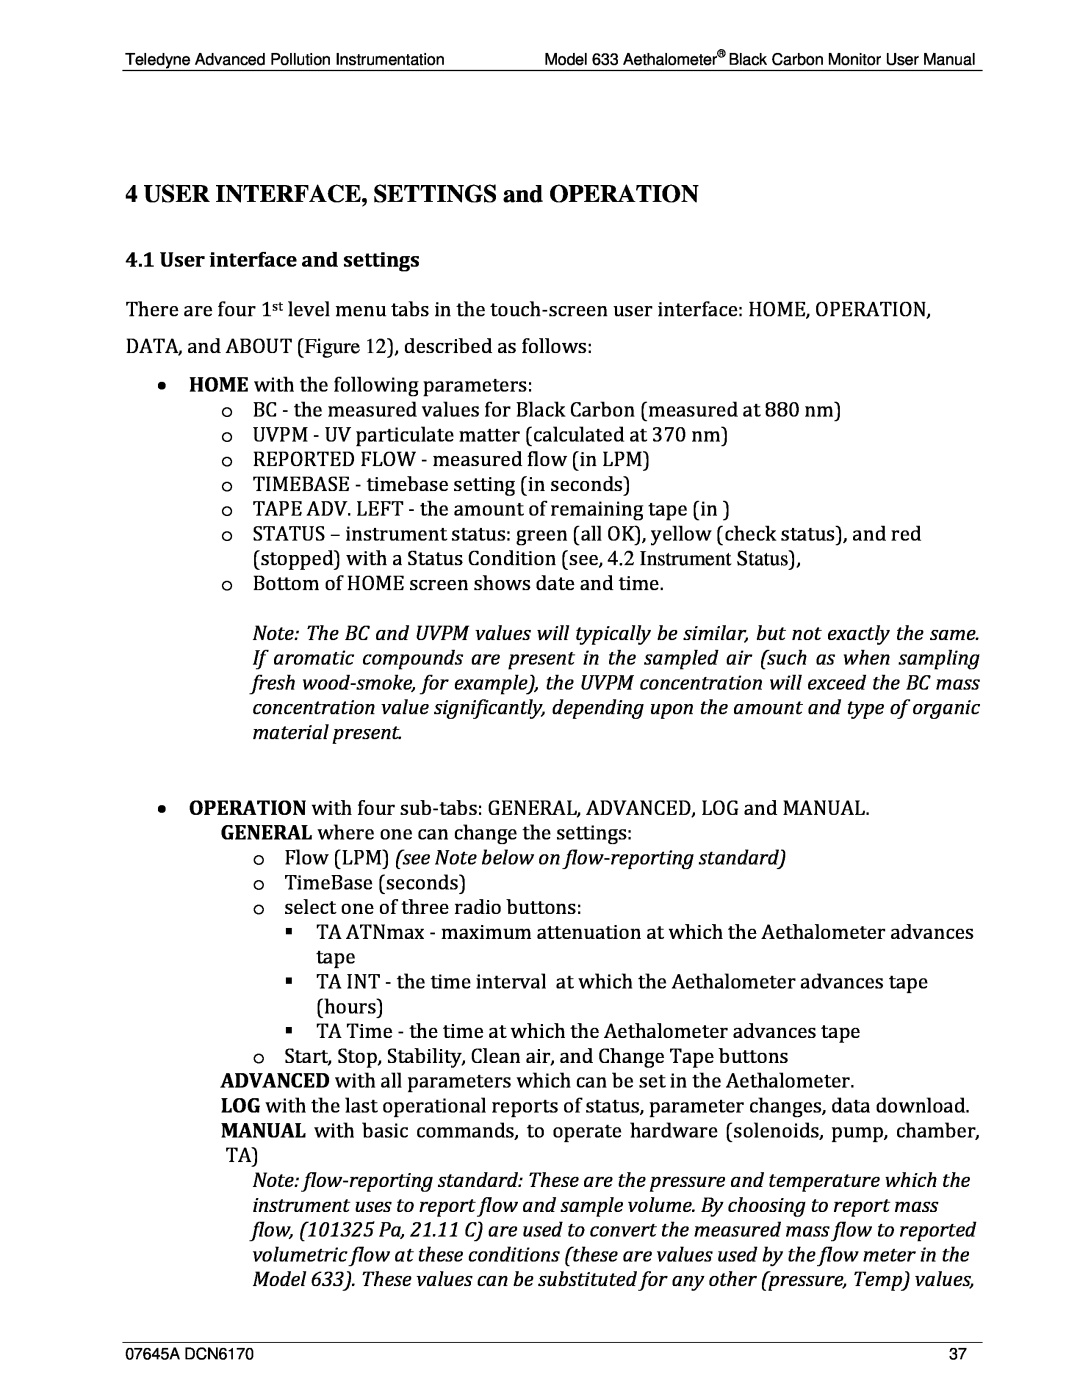 Teledyne 633 user manual USER INTERFACE, SETTINGS and OPERATION, User interface and settings 